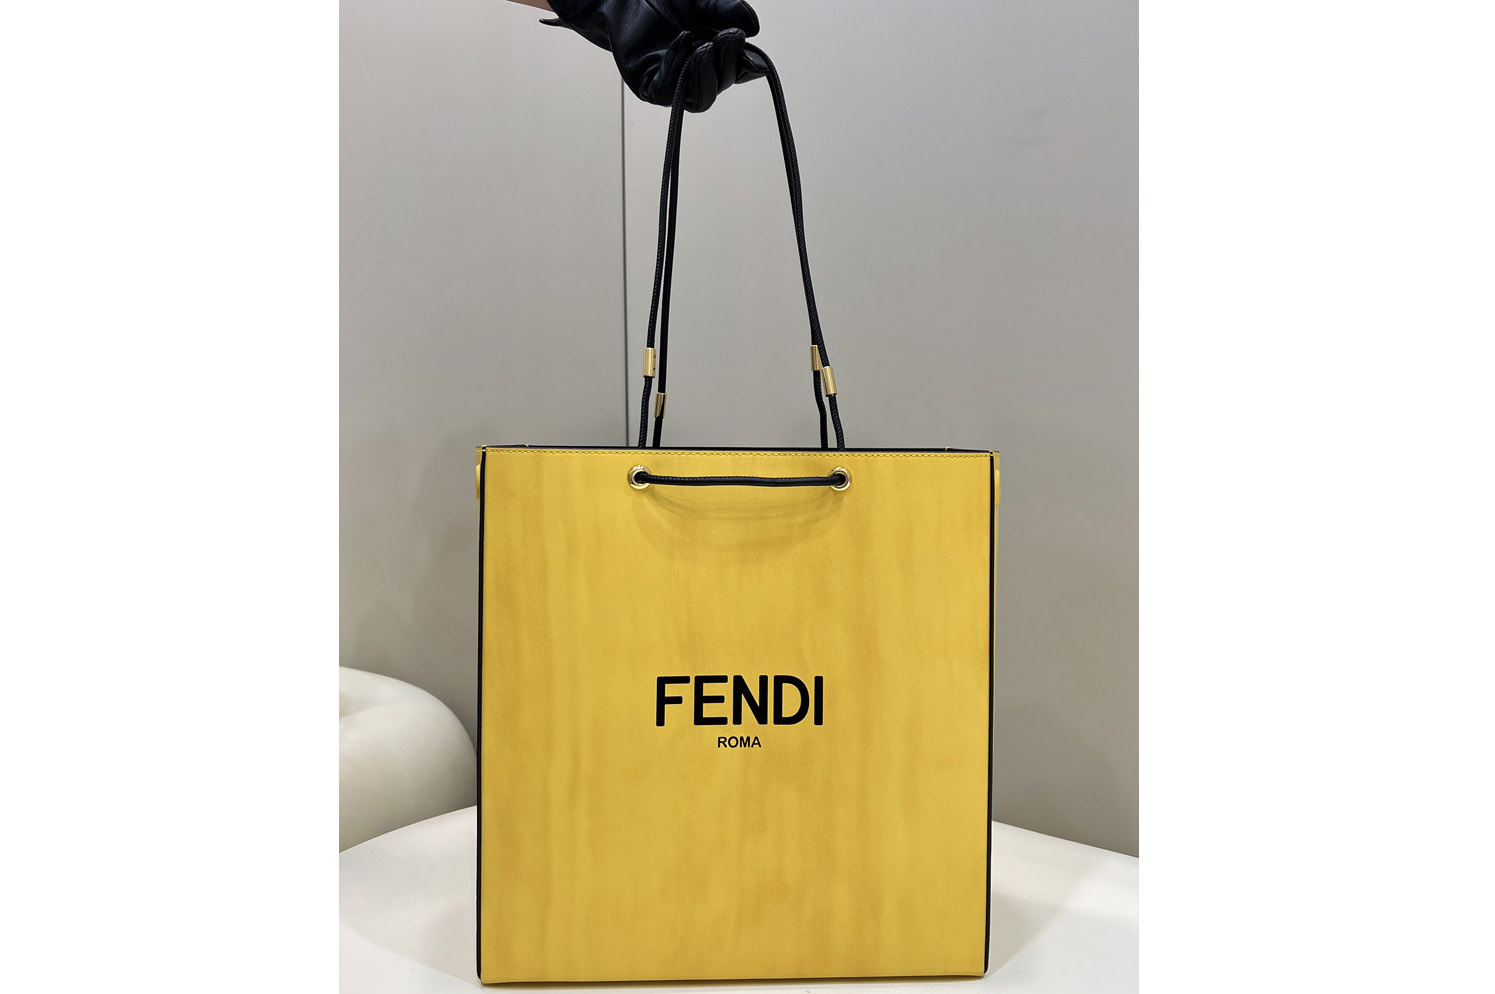 Fendi 8BH383 Shopping medium Tote Bag in Yellow Leather